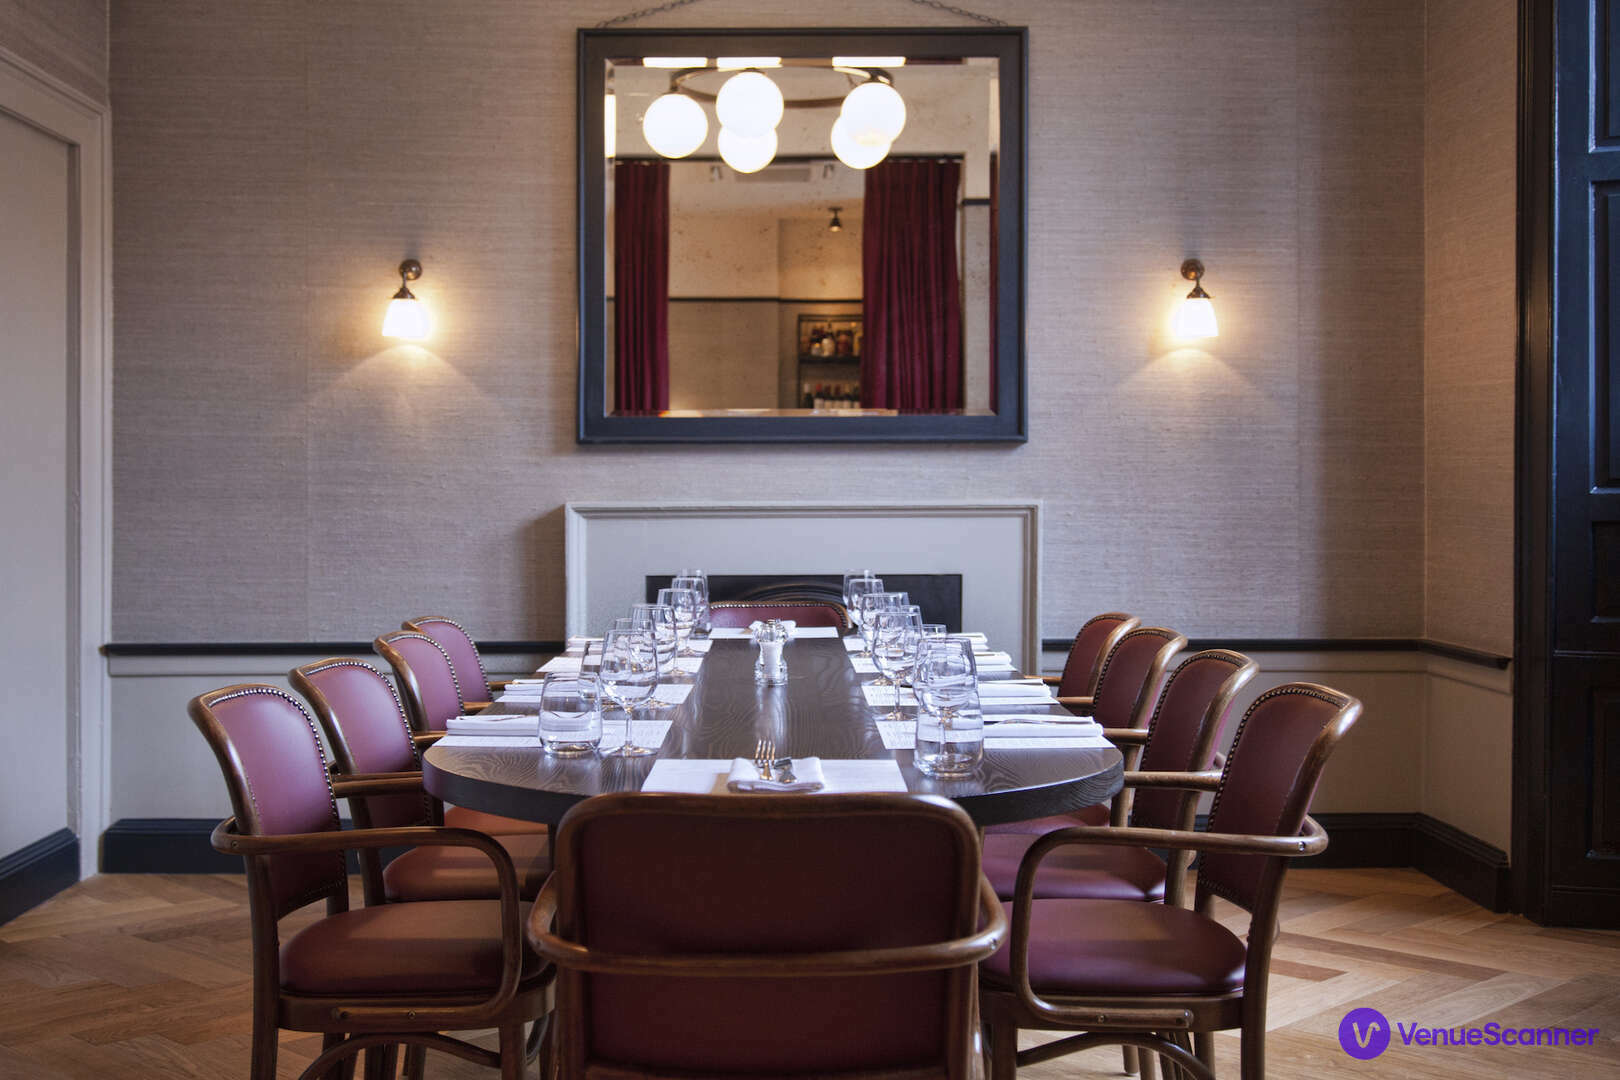 Hire Edinburgh - Cote Brasserie Private Dining Room